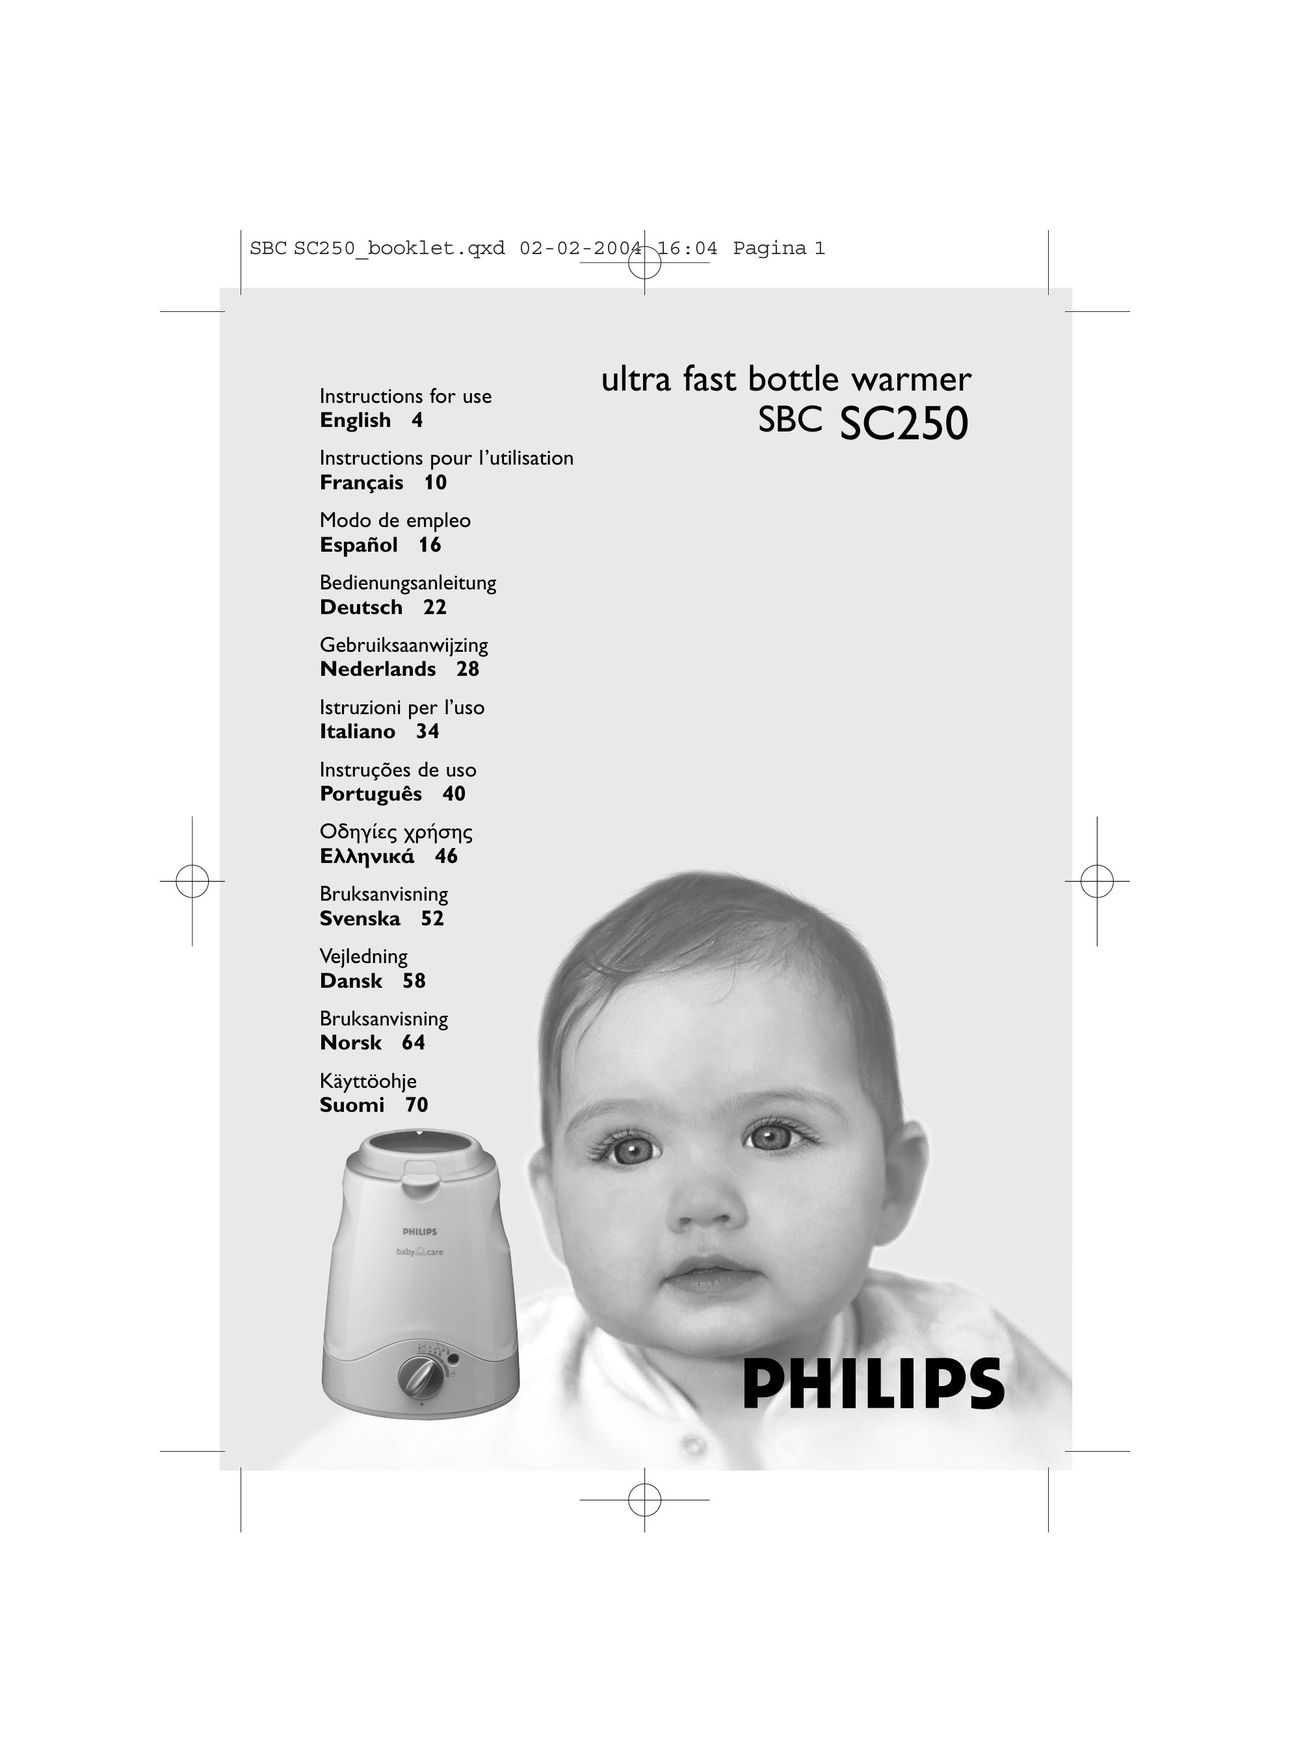 Philips SC250SBC Bottle Warmer User Manual